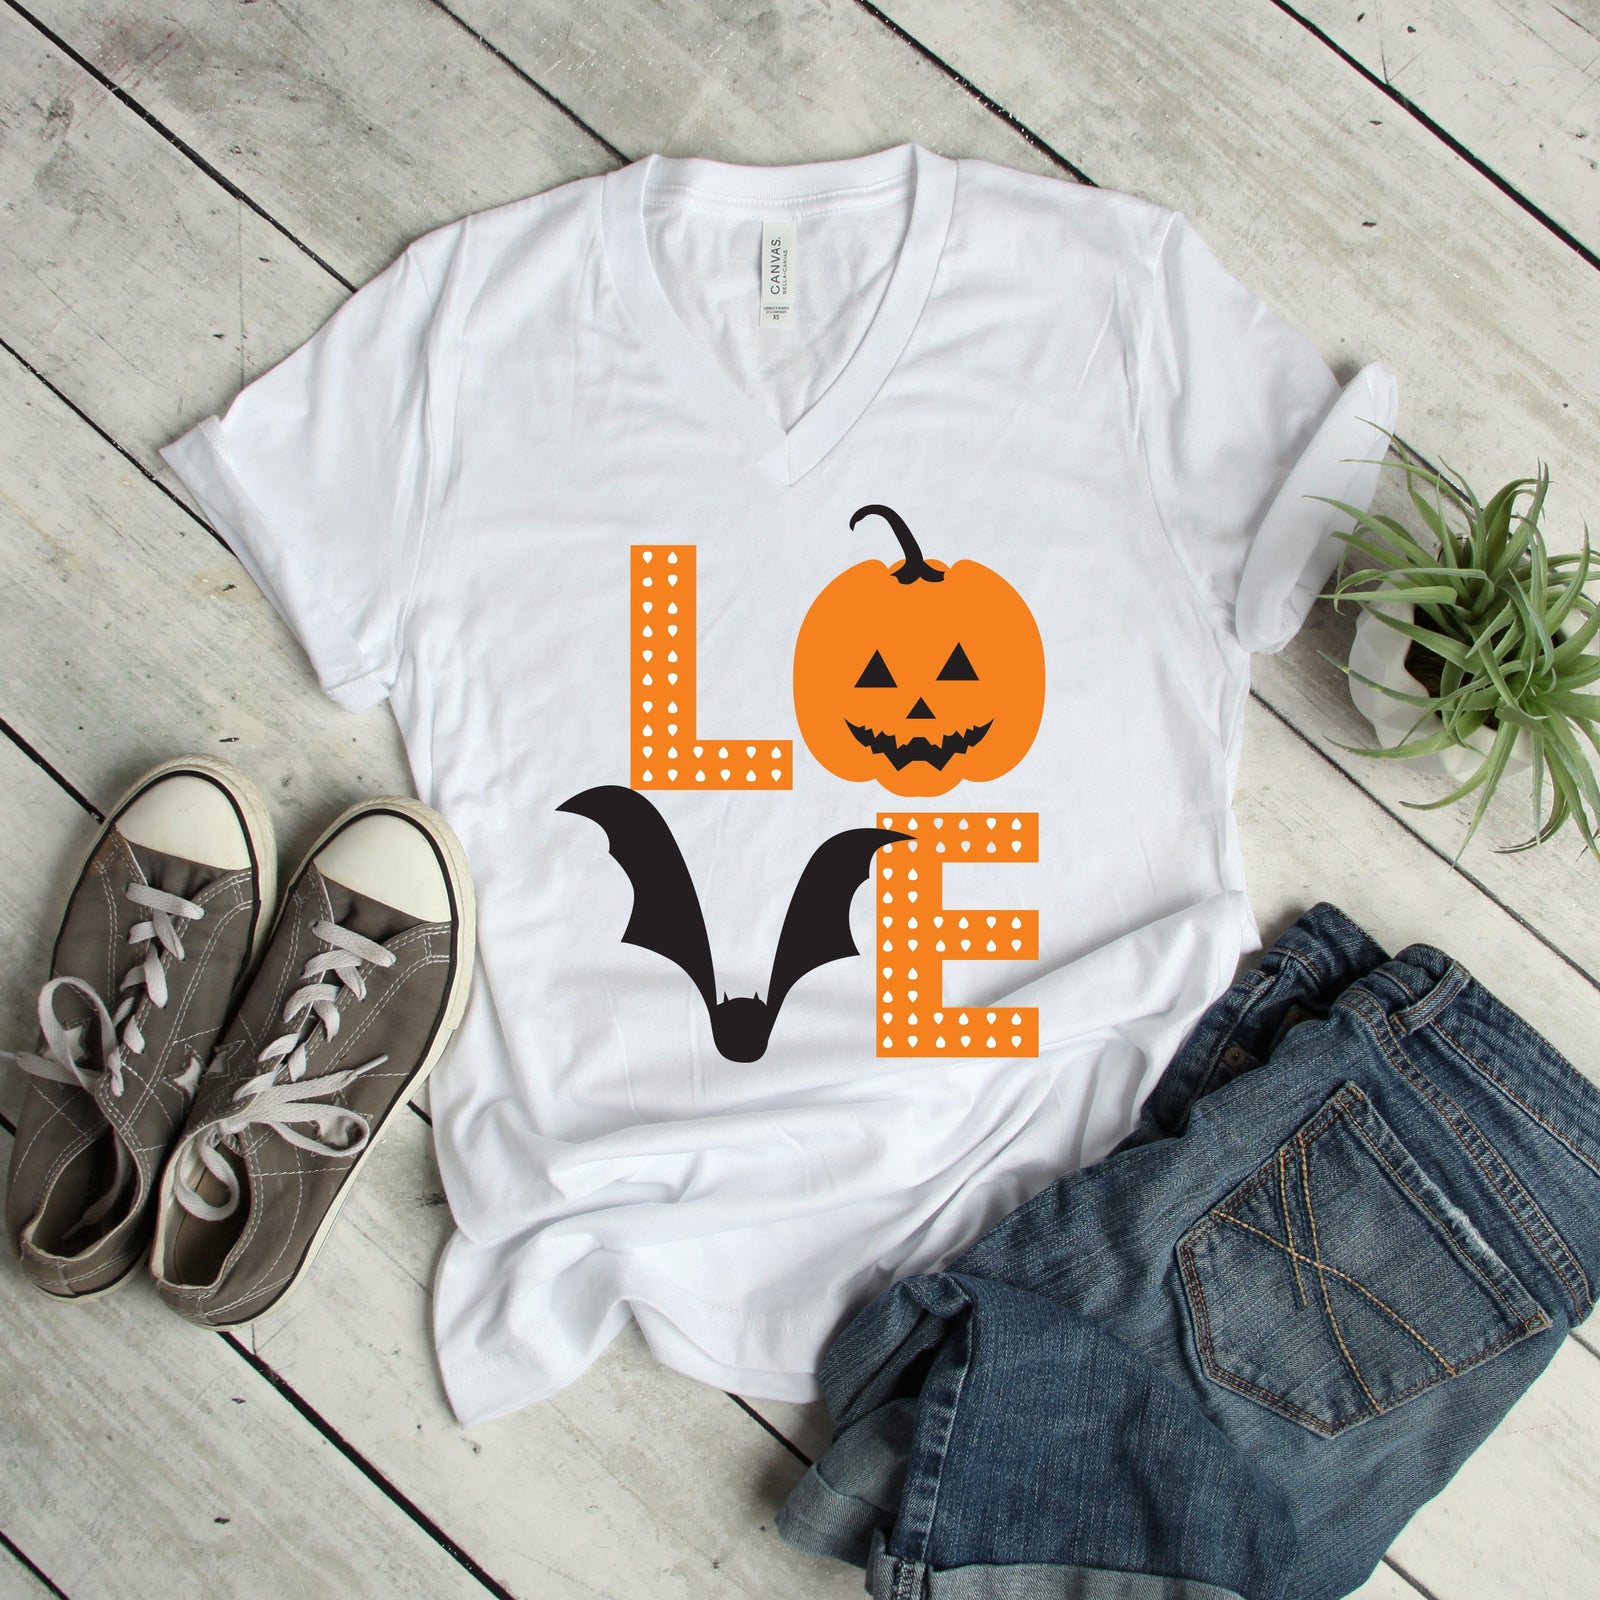 Halloween Love  Adult T Shirt - Halloween - Office - School -  - Fun Not So Scary